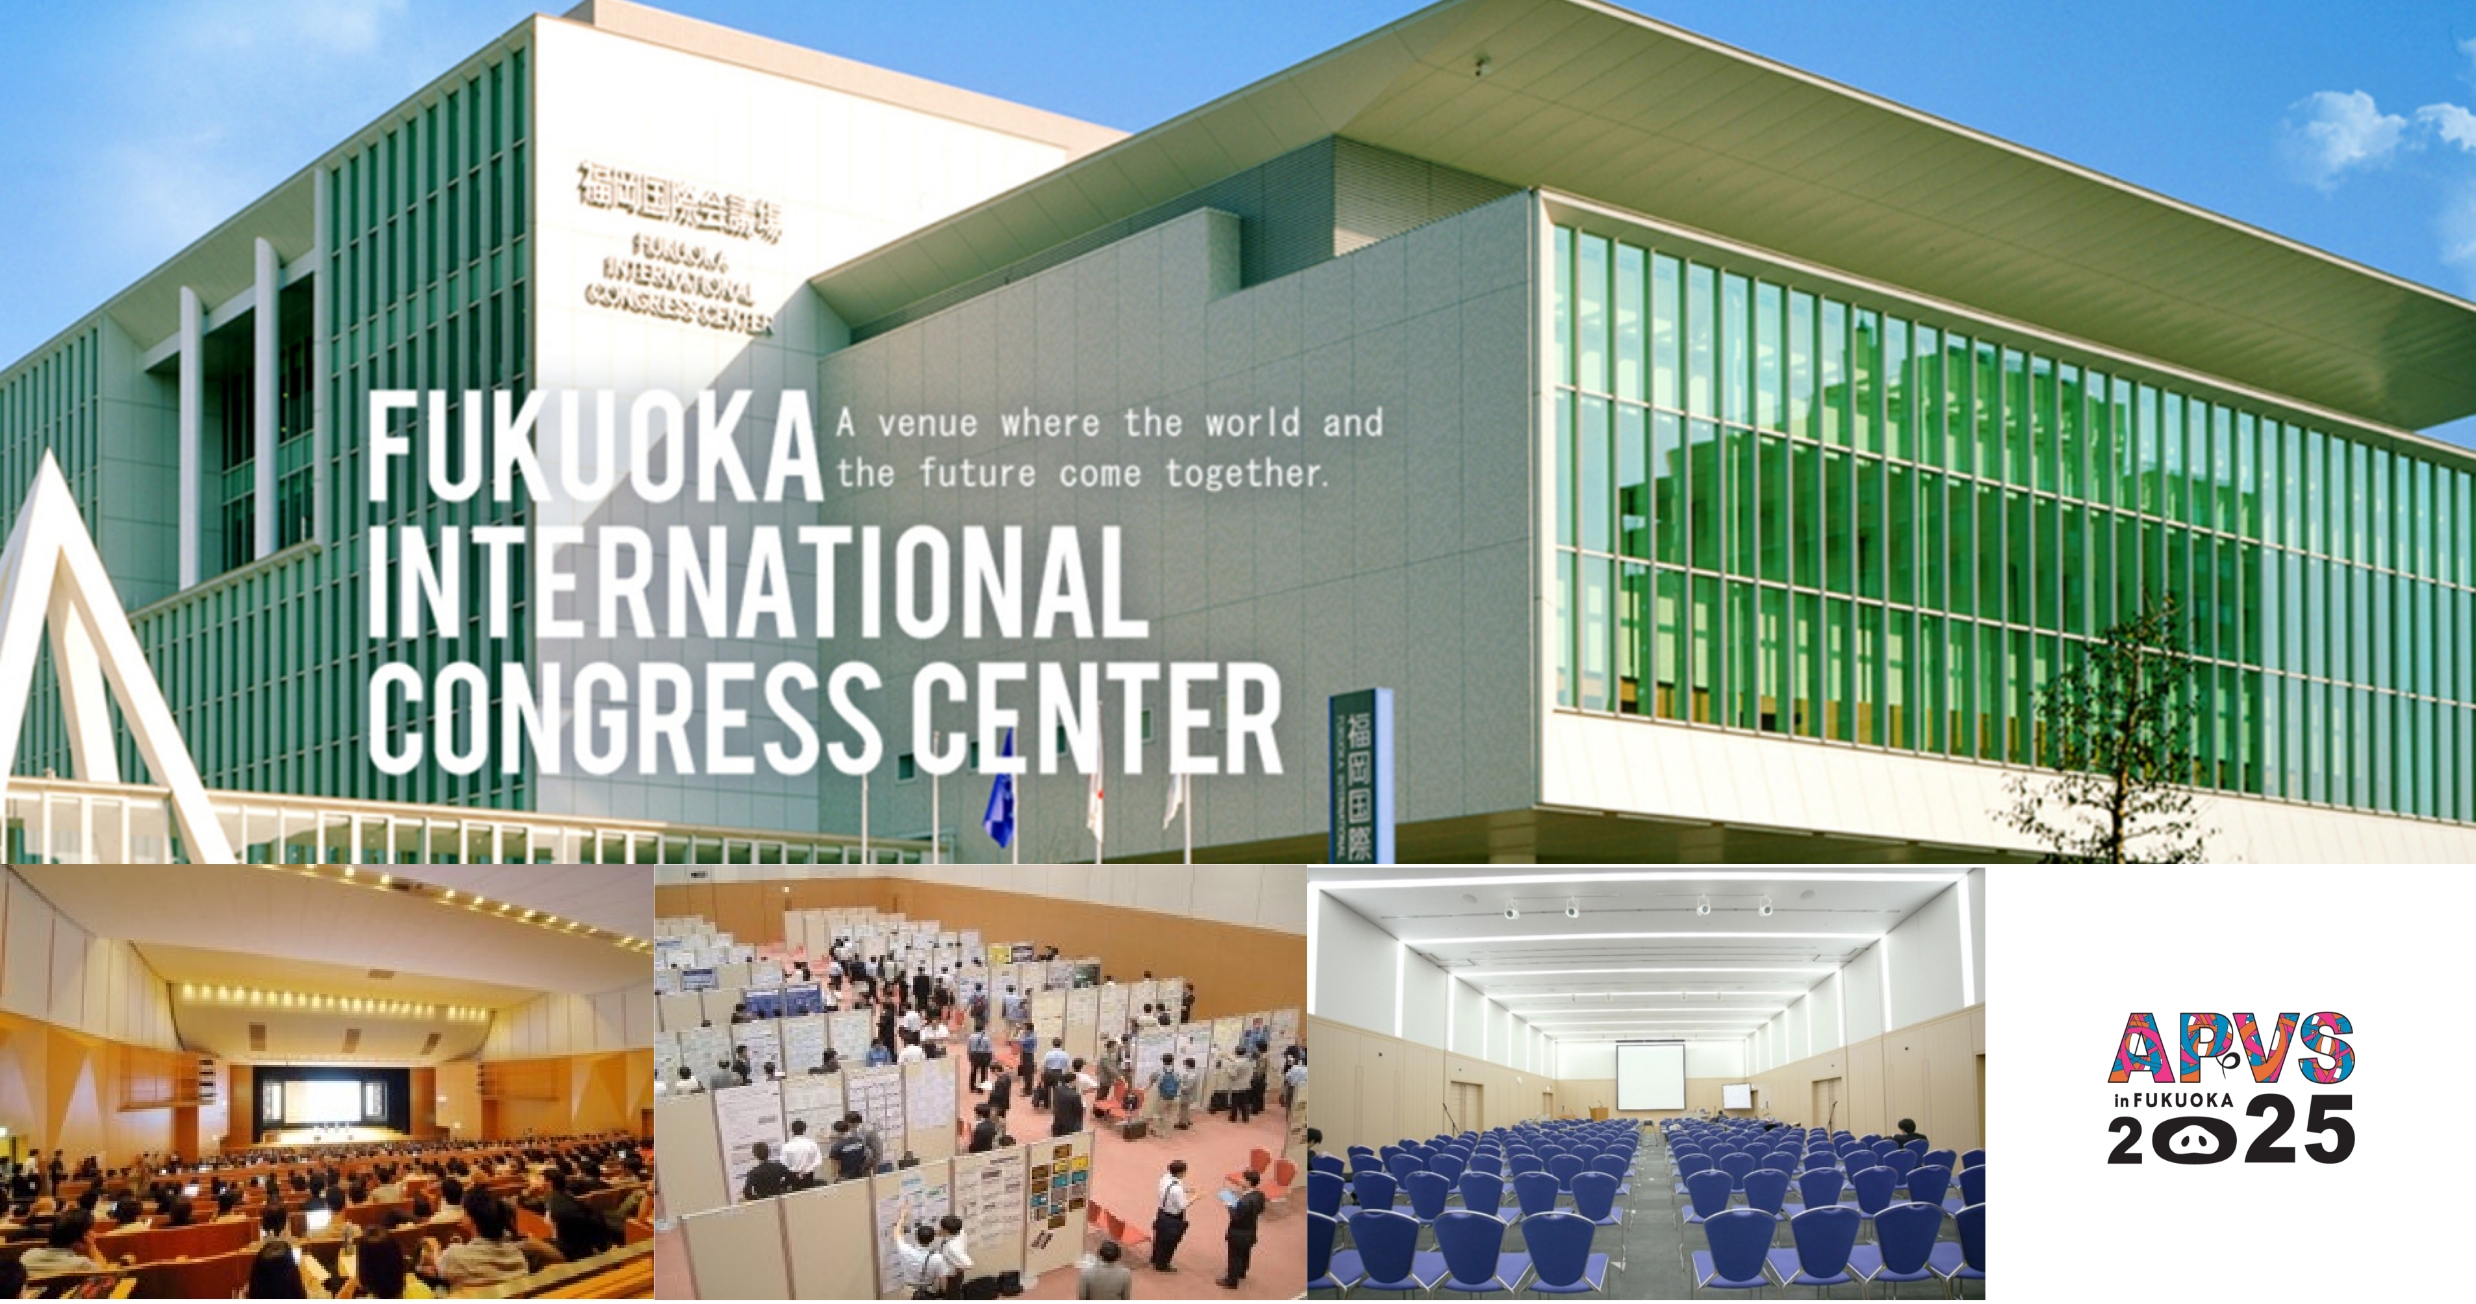 FUKUOKA INTERNATIONAL CONGRESS CENTER